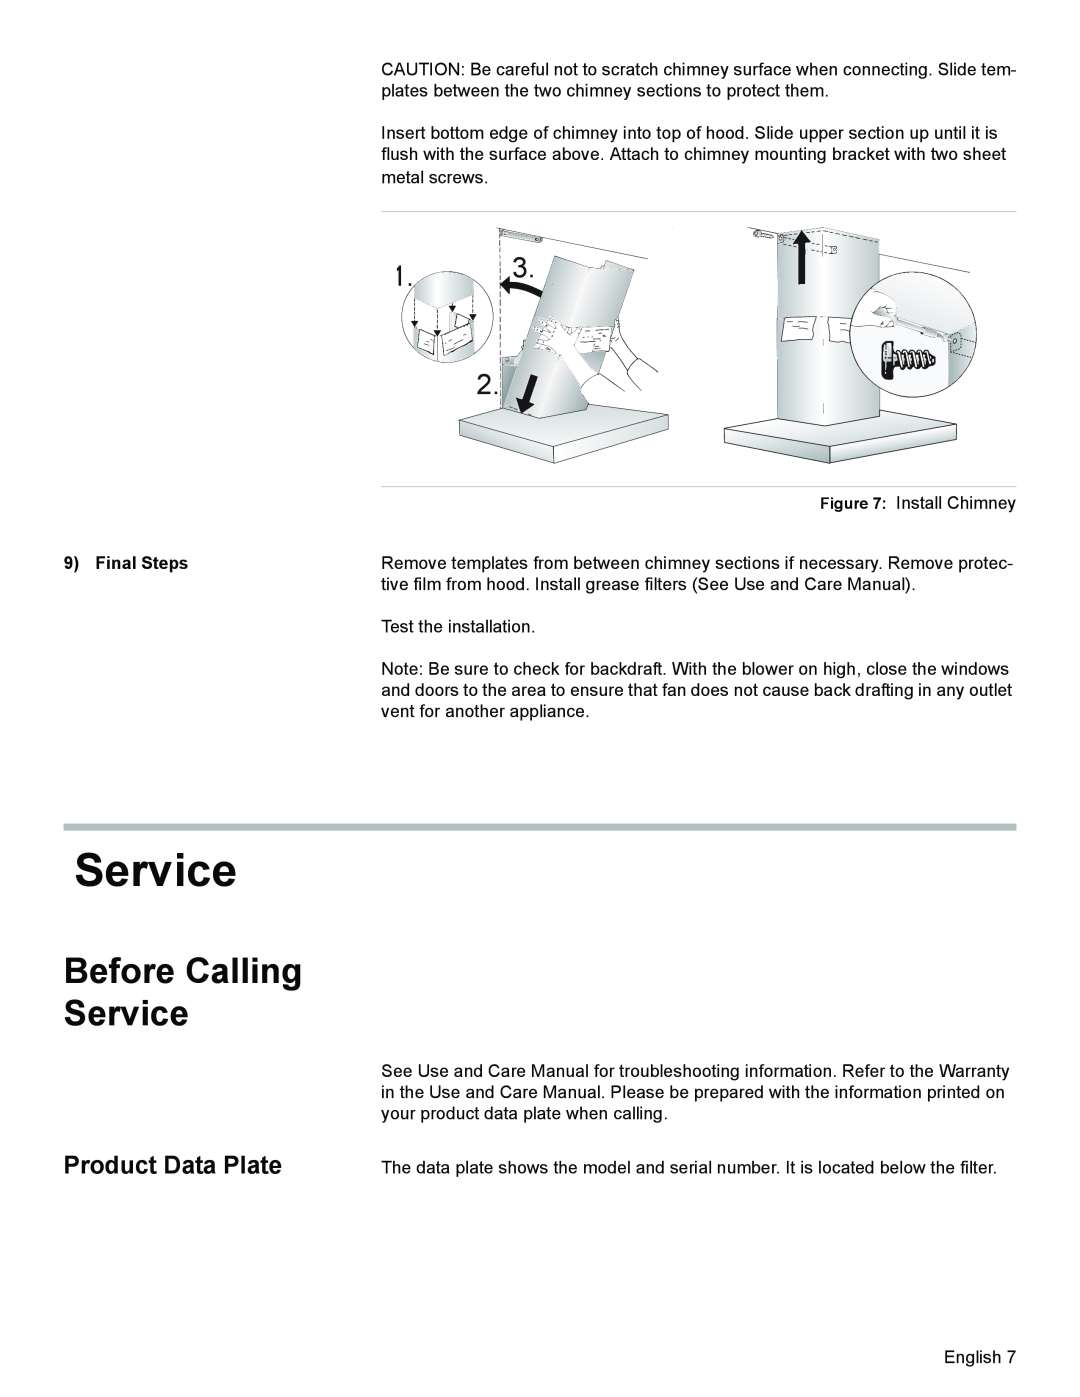 Bosch Appliances DKE94 installation manual Product Data Plate, Final Steps, Before Calling Service 